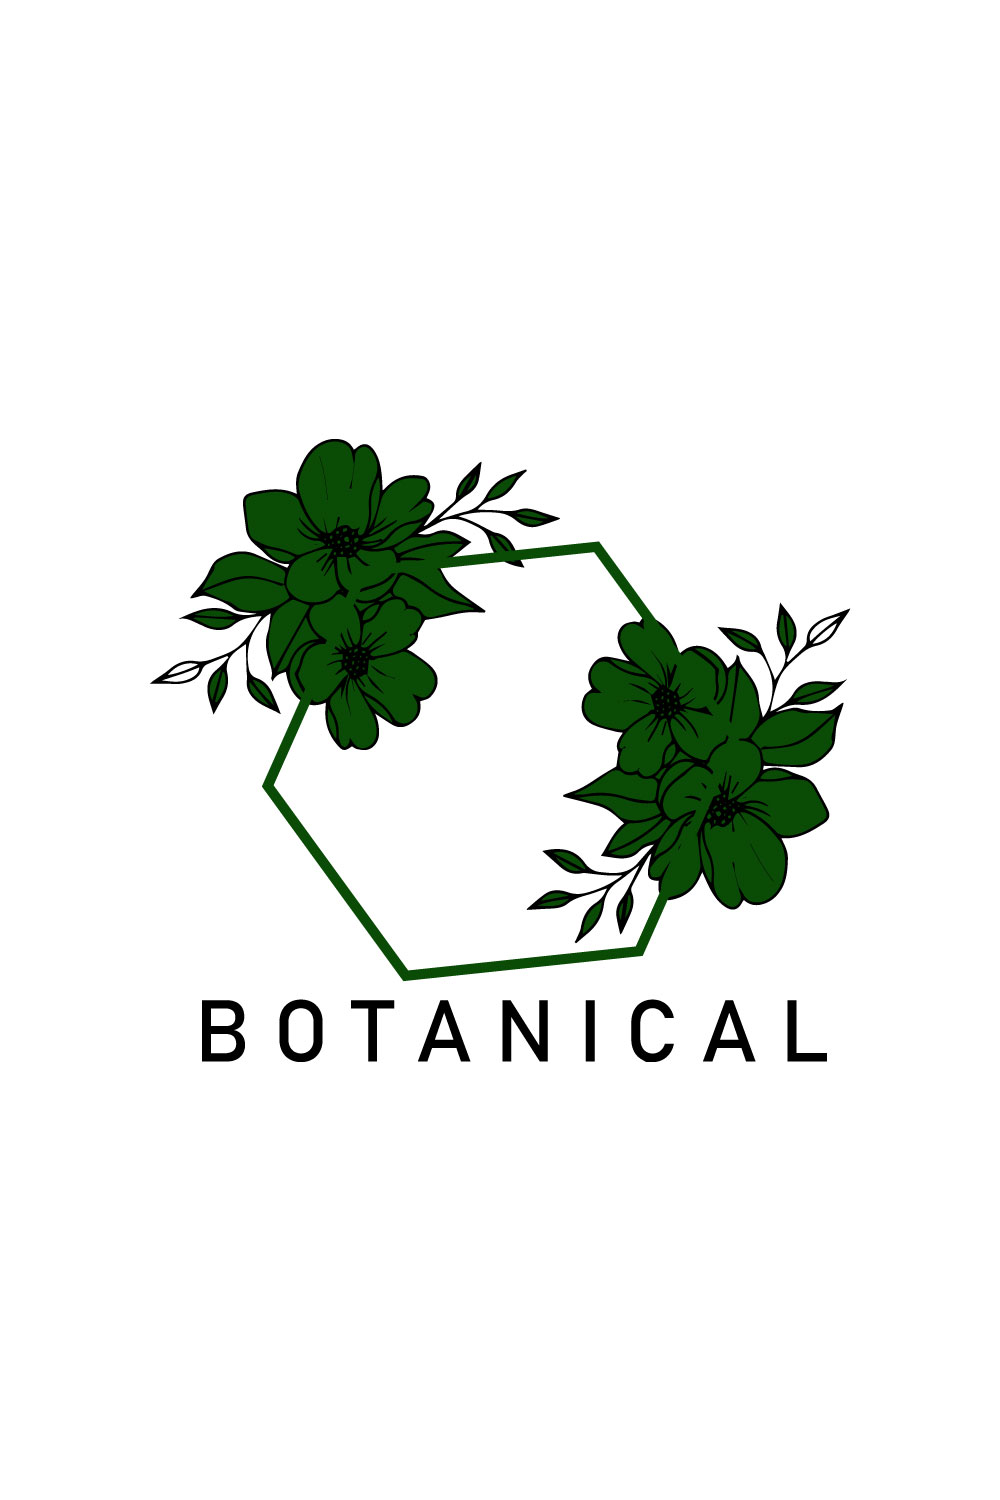 Free botanical elements logo pinterest preview image.